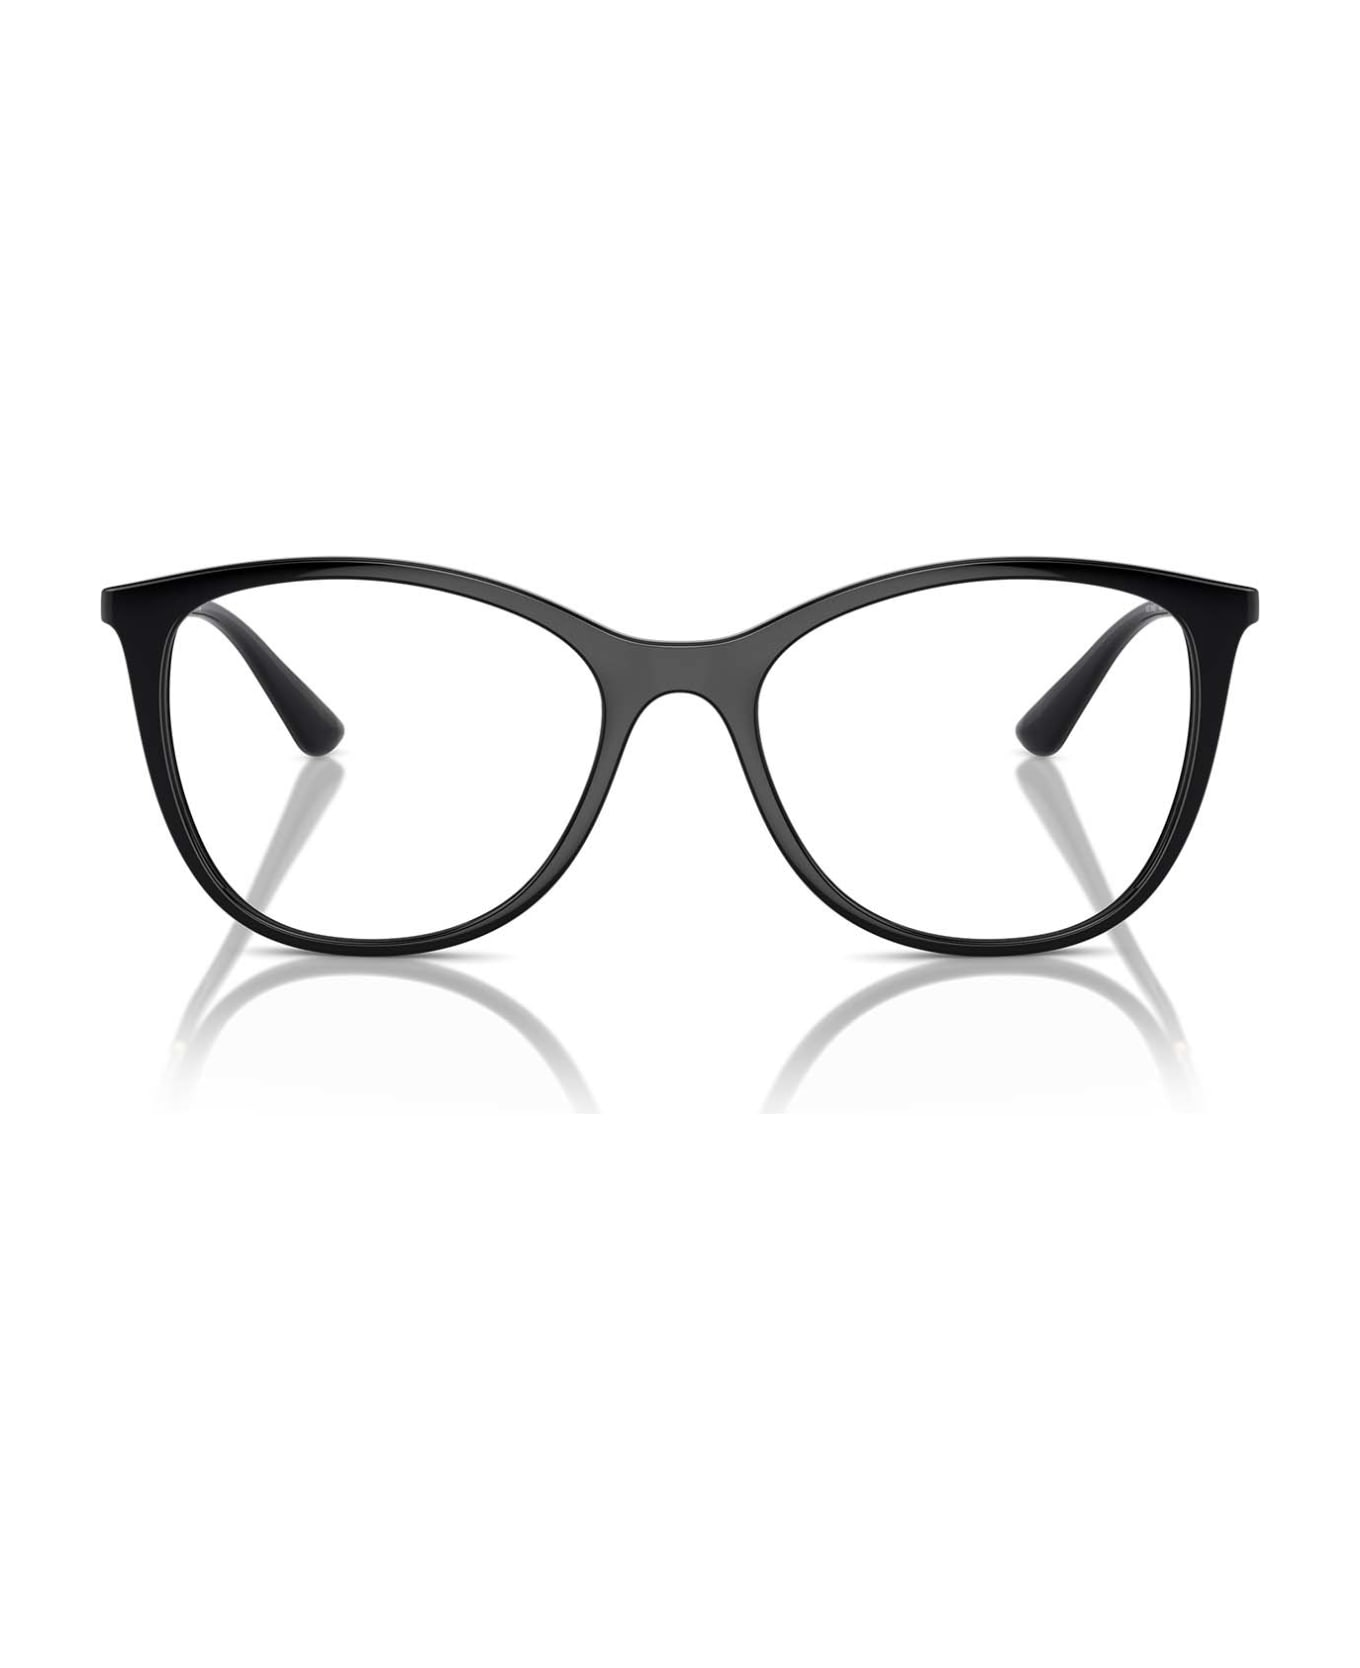 Vogue Eyewear Vo5562 Black Glasses - Black アイウェア